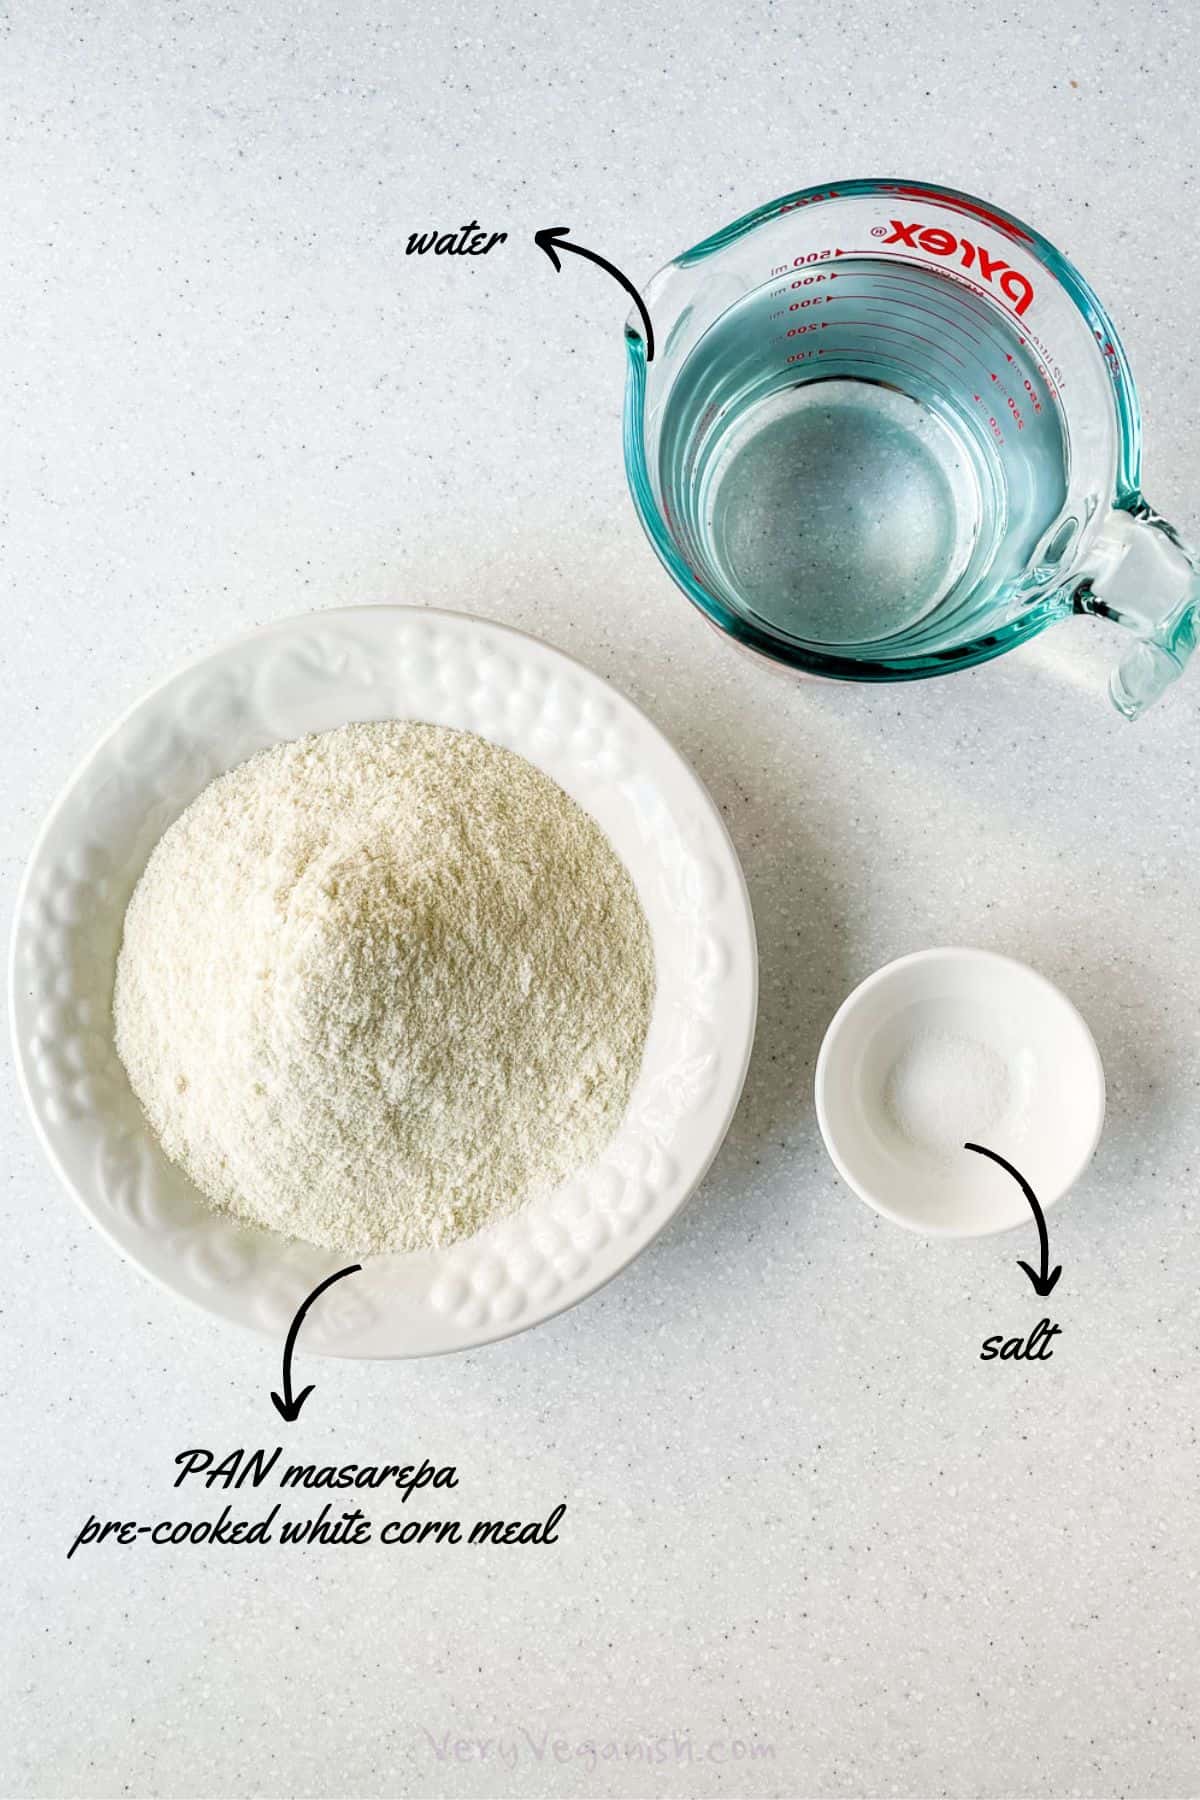 Ingredients for Venezuelan Arepas: PAN masarepa, water and salt